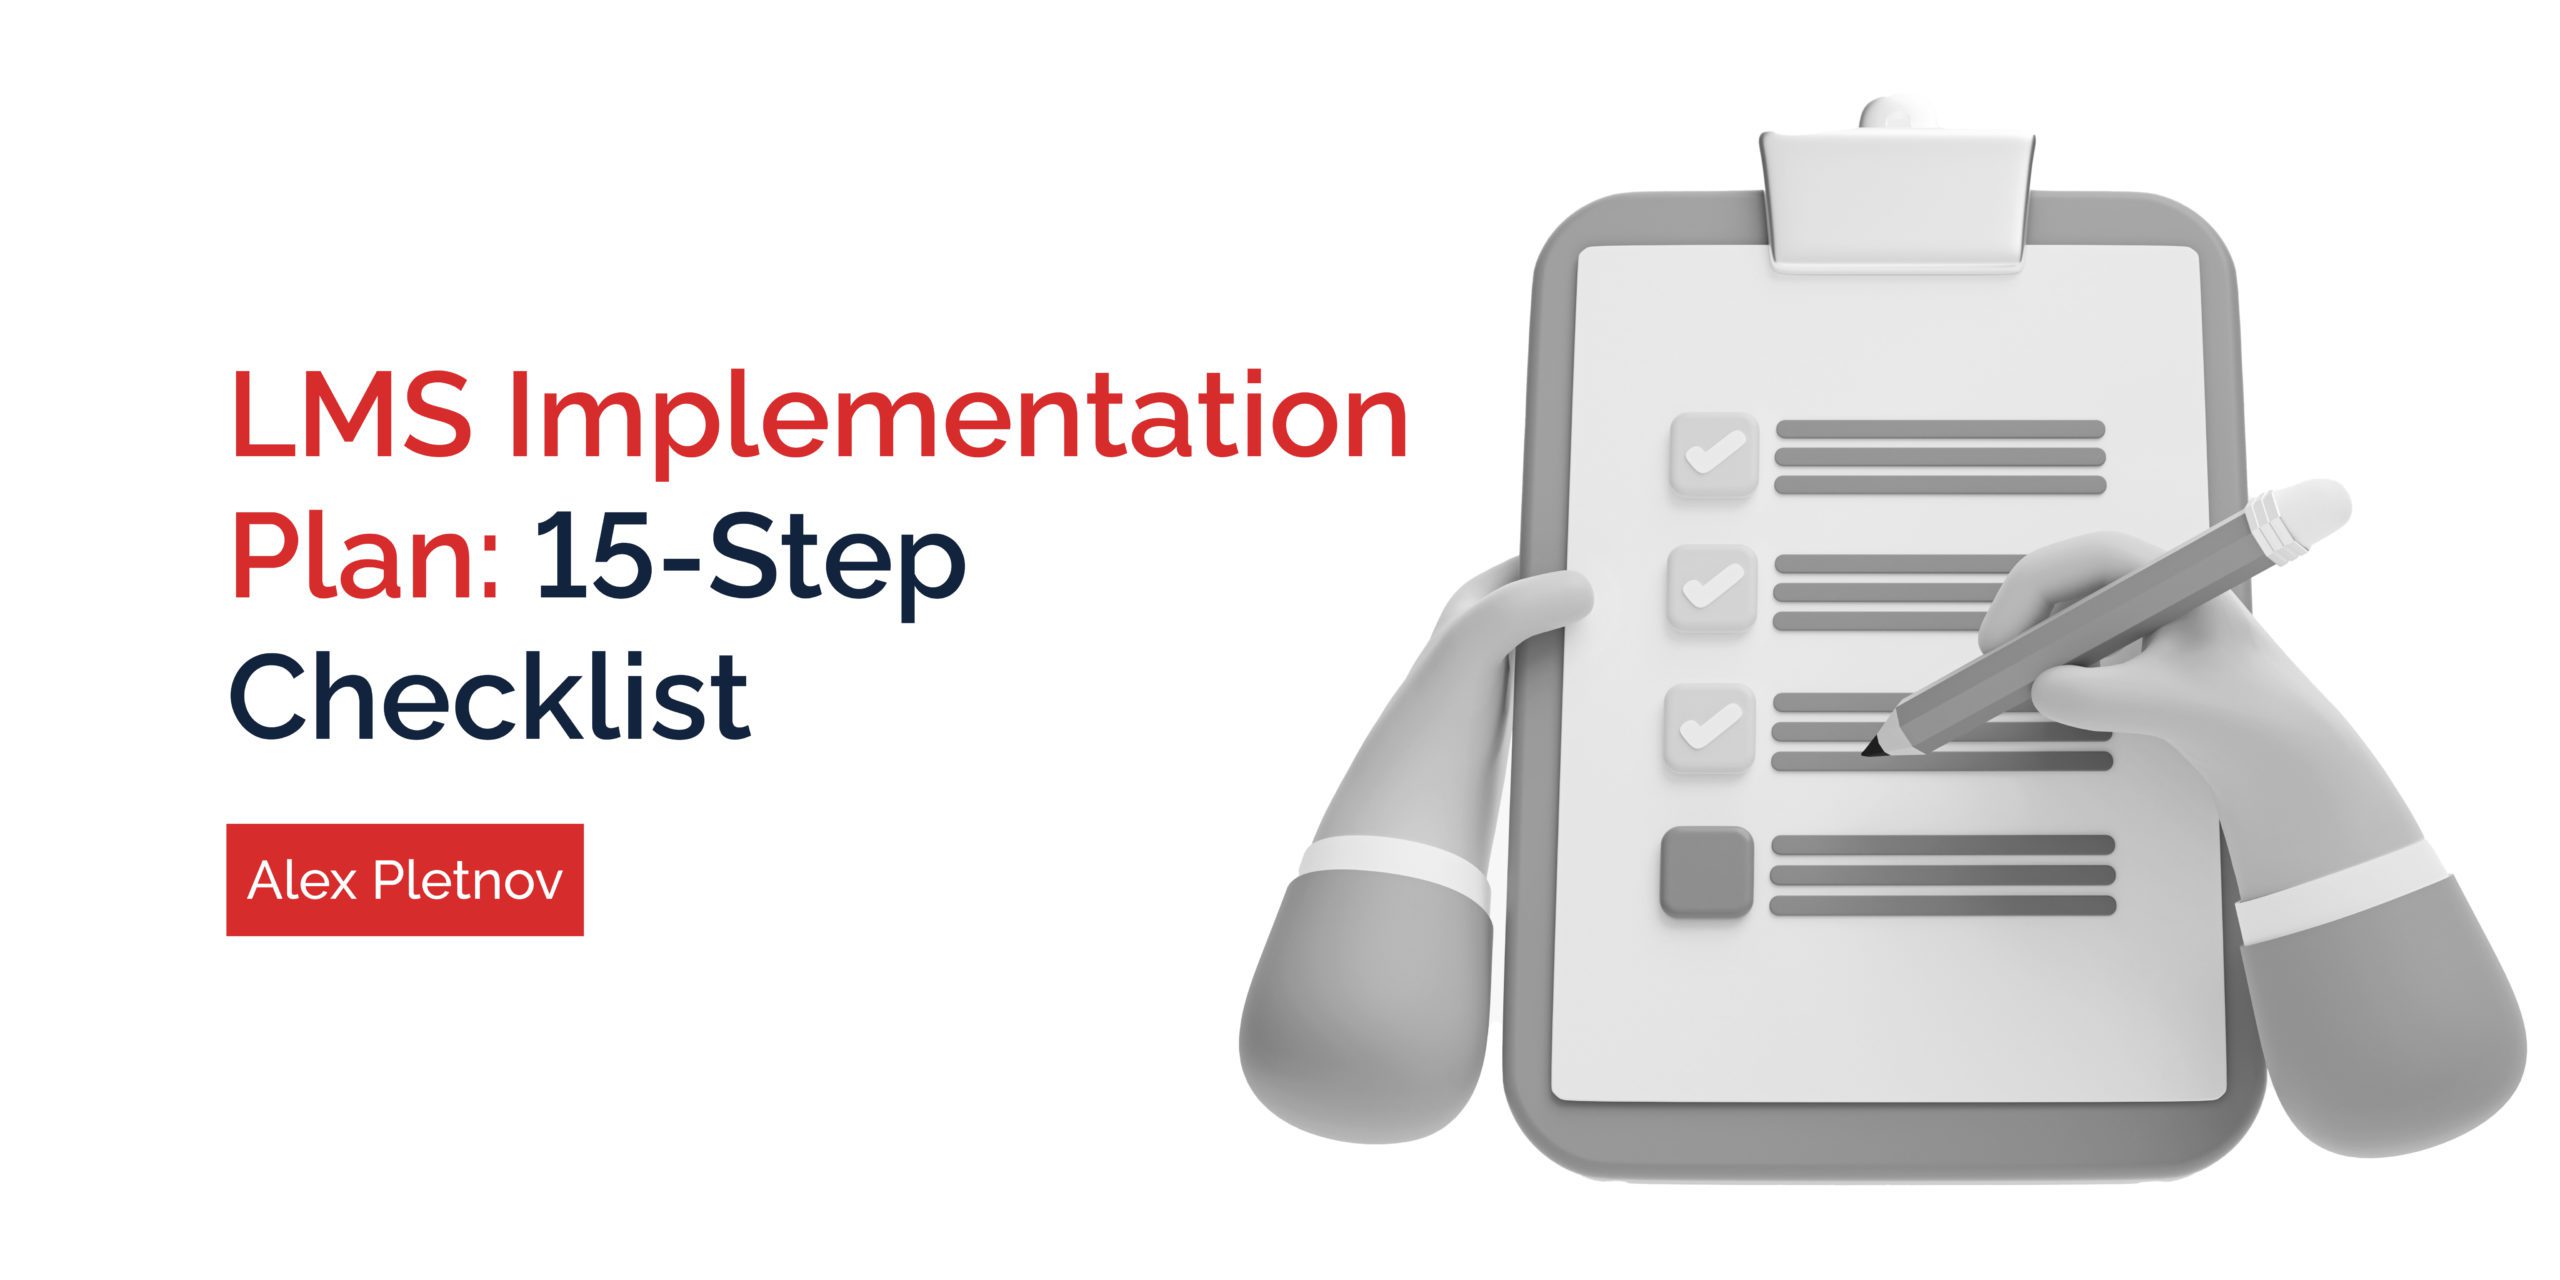 LMS Implementation Plan: 15-Step Checklist